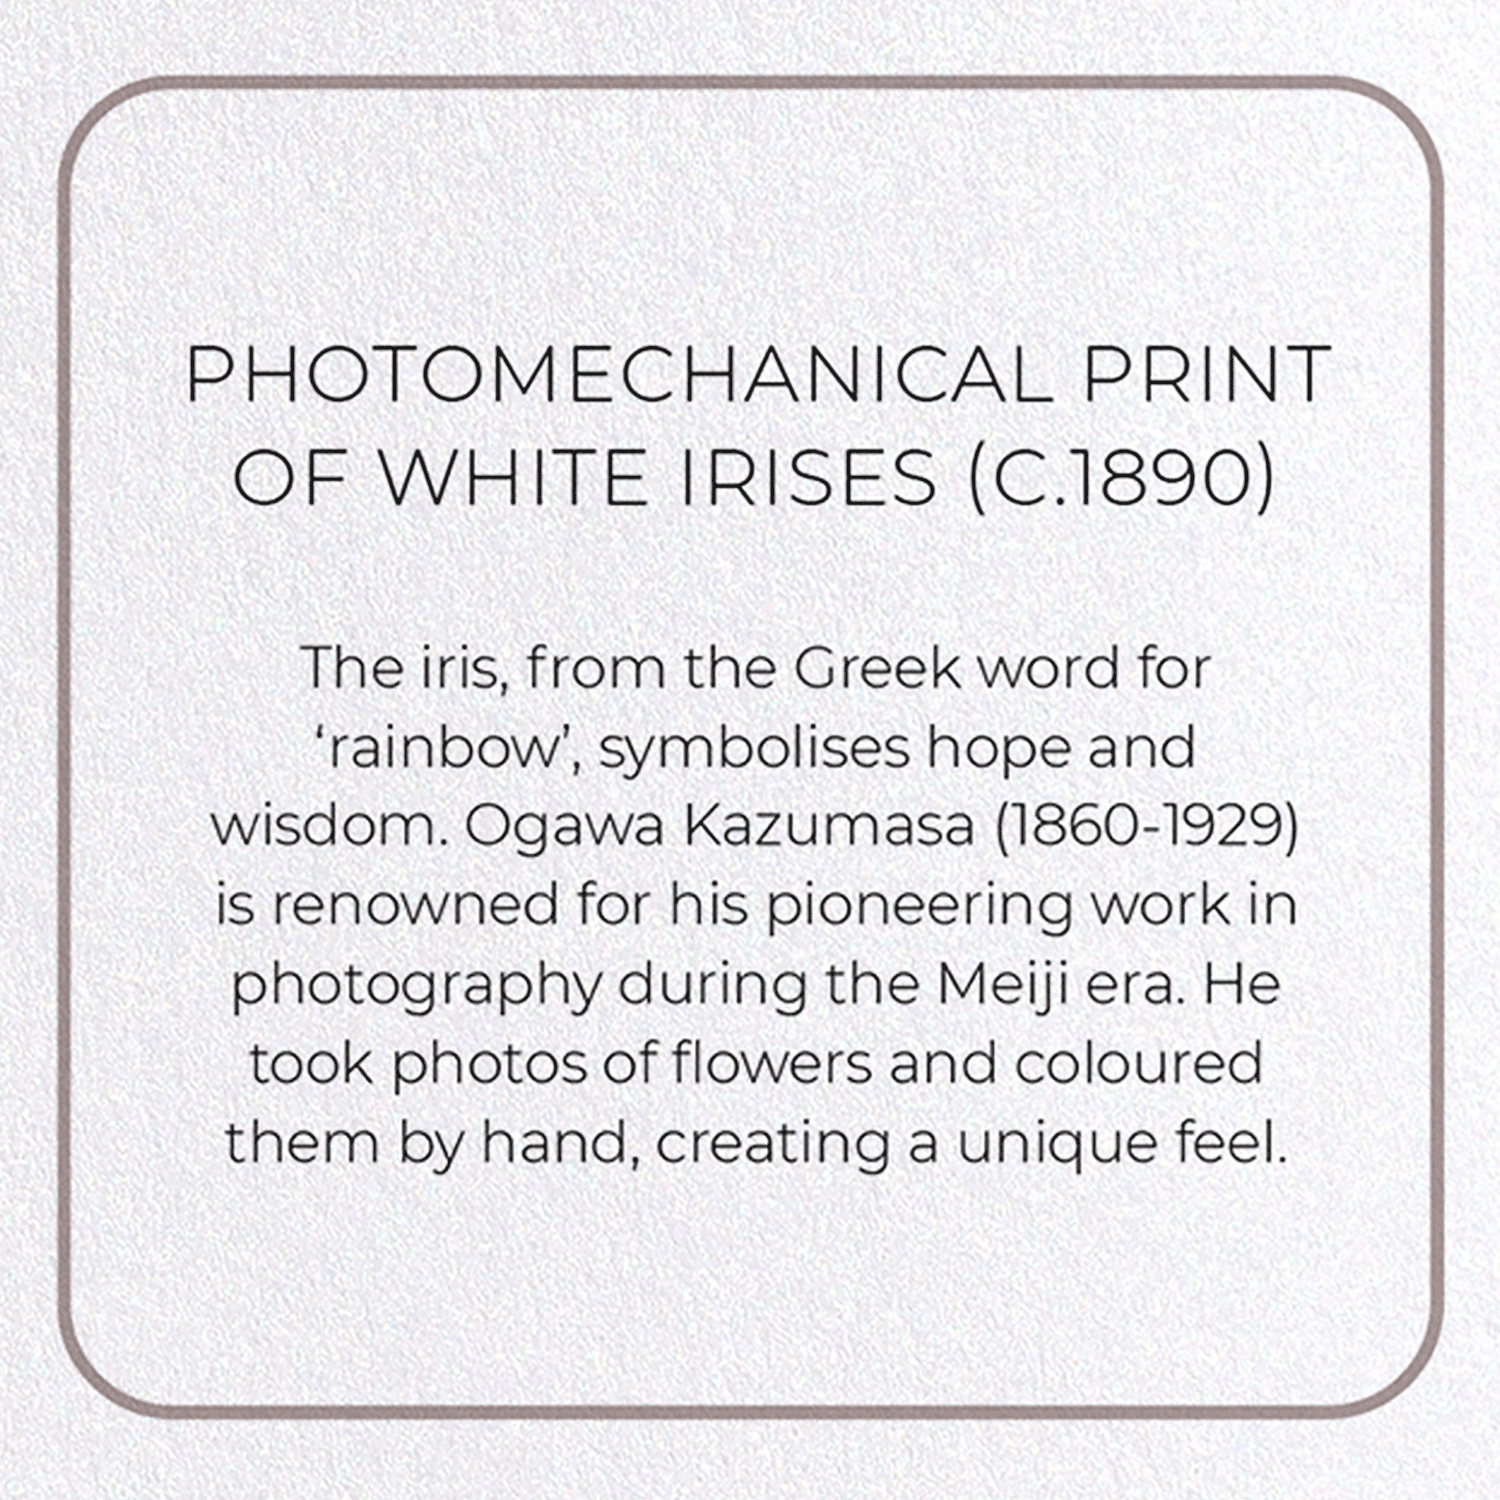 PHOTOMECHANICAL PRINT OF WHITE IRISES (C.1890)